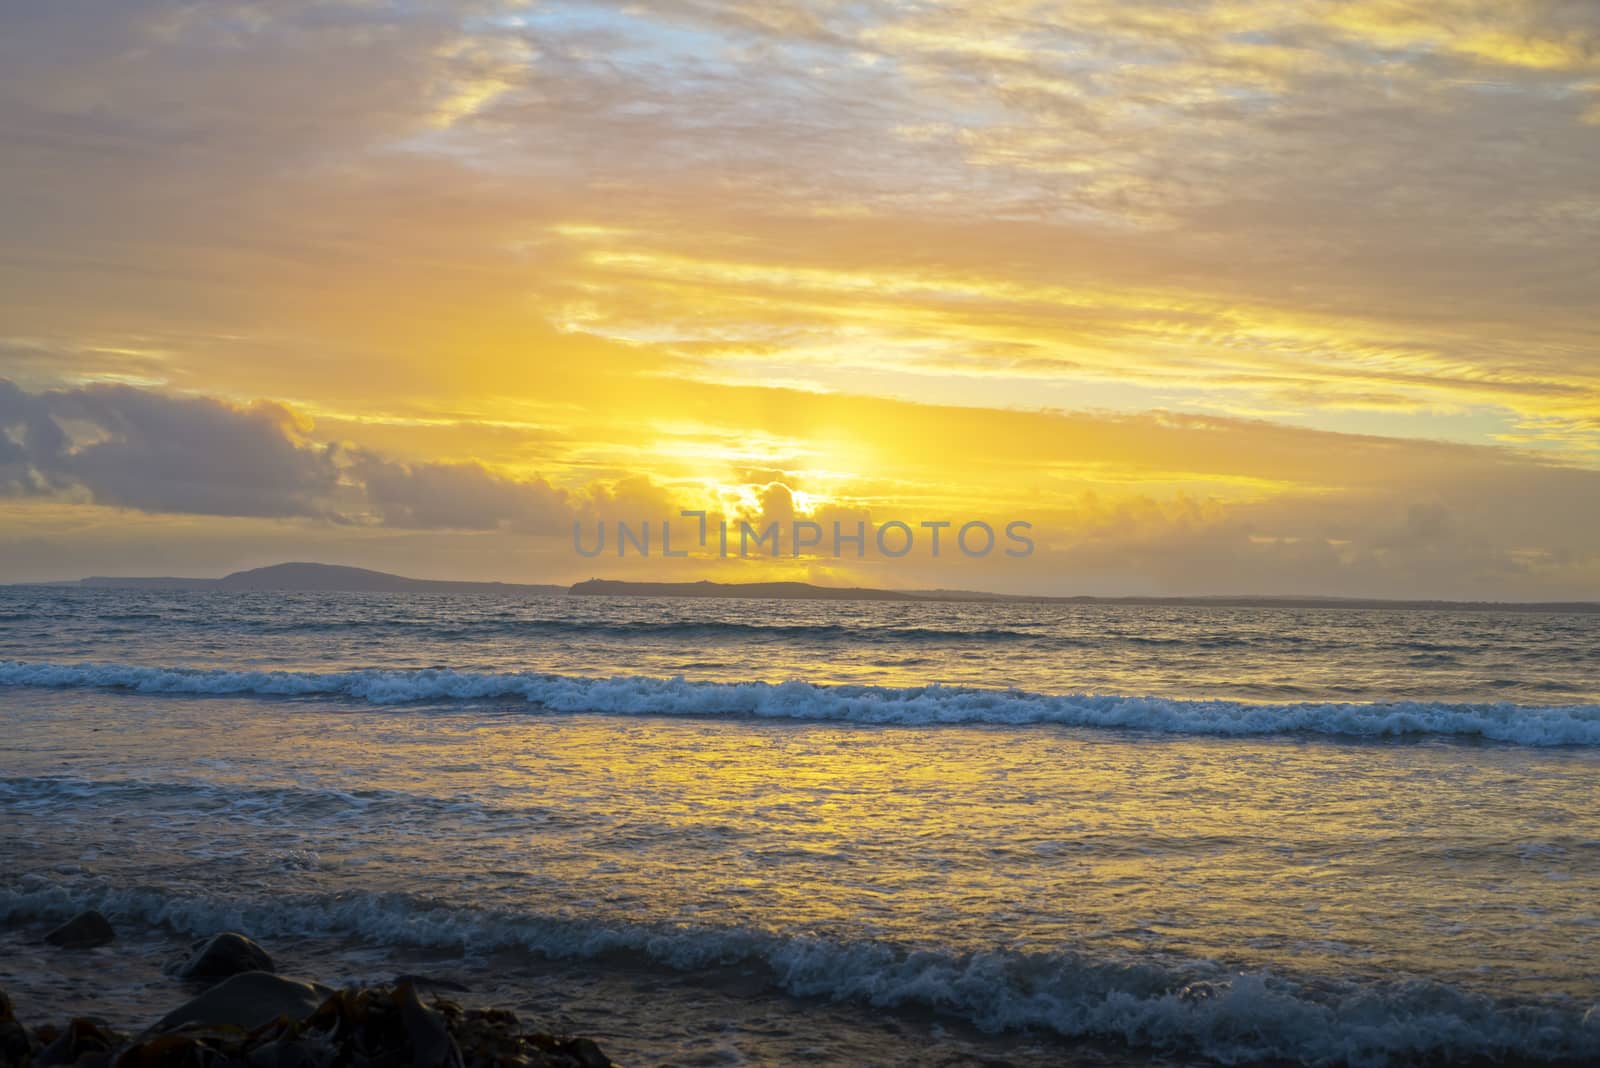 beal beach near ballybunion on the wild atlantic way ireland with a beautiful yellow sunset